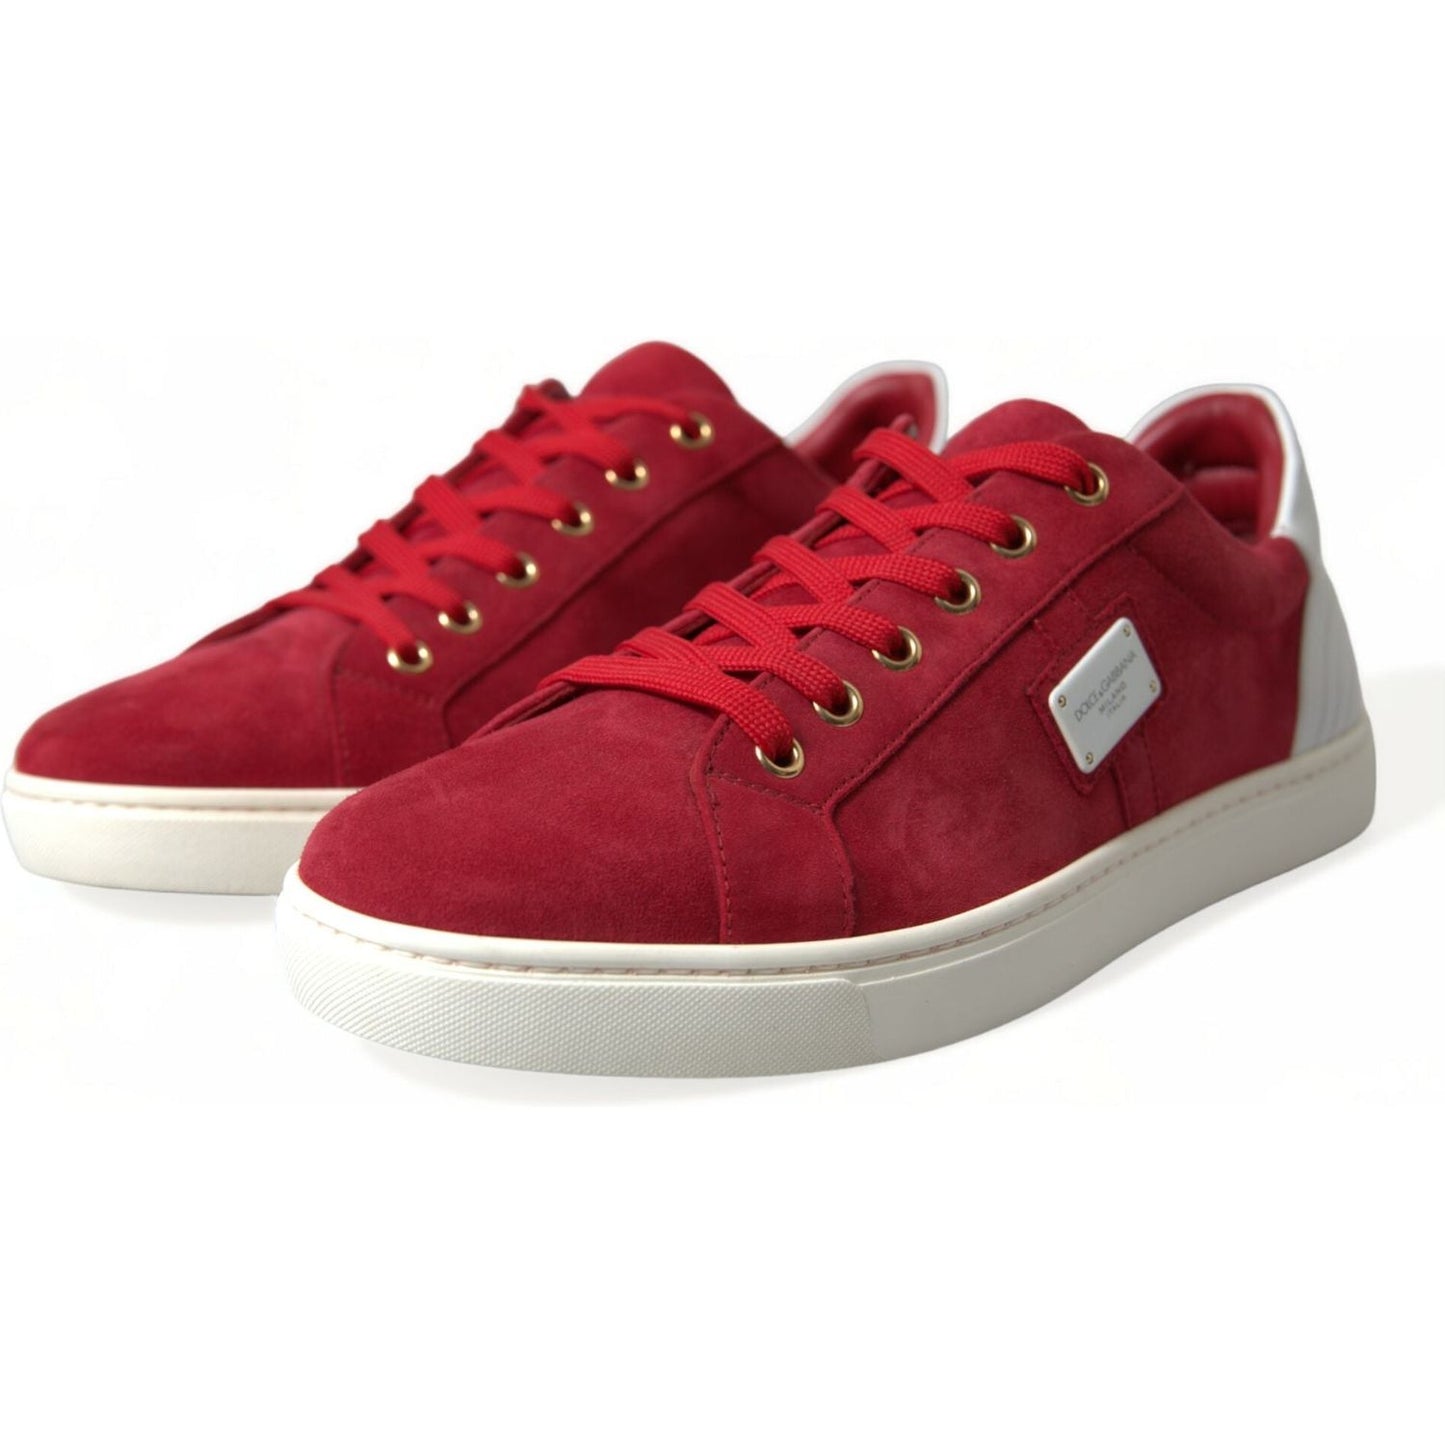 Dolce & GabbanaElegant Red & White Low Top SneakersMcRichard Designer Brands£349.00